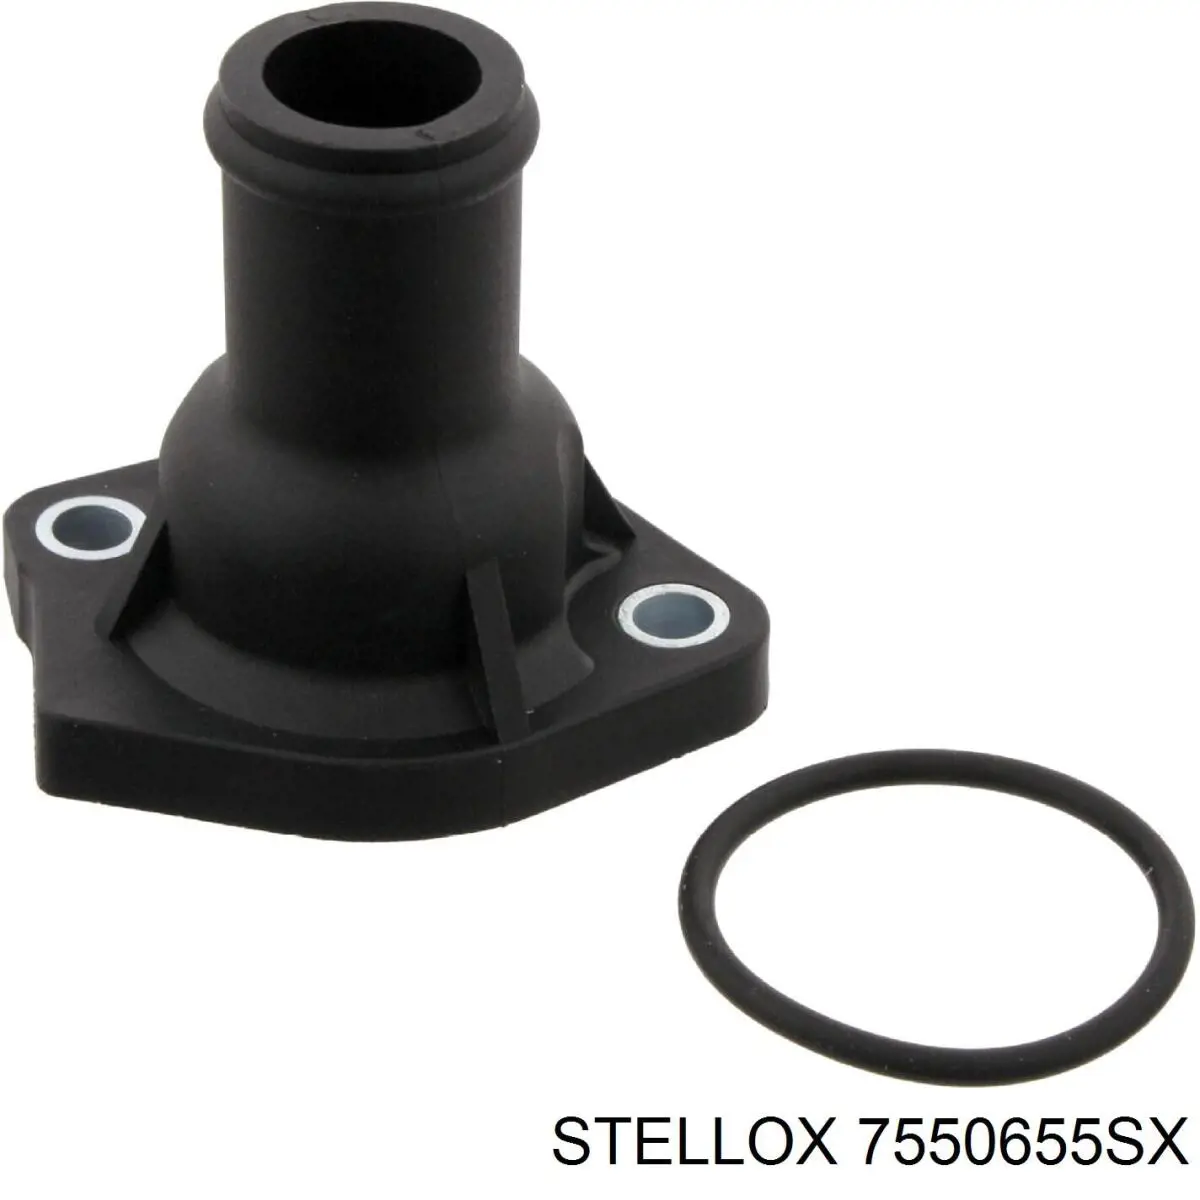 7550655SX Stellox фланец системы охлаждения (тройник)